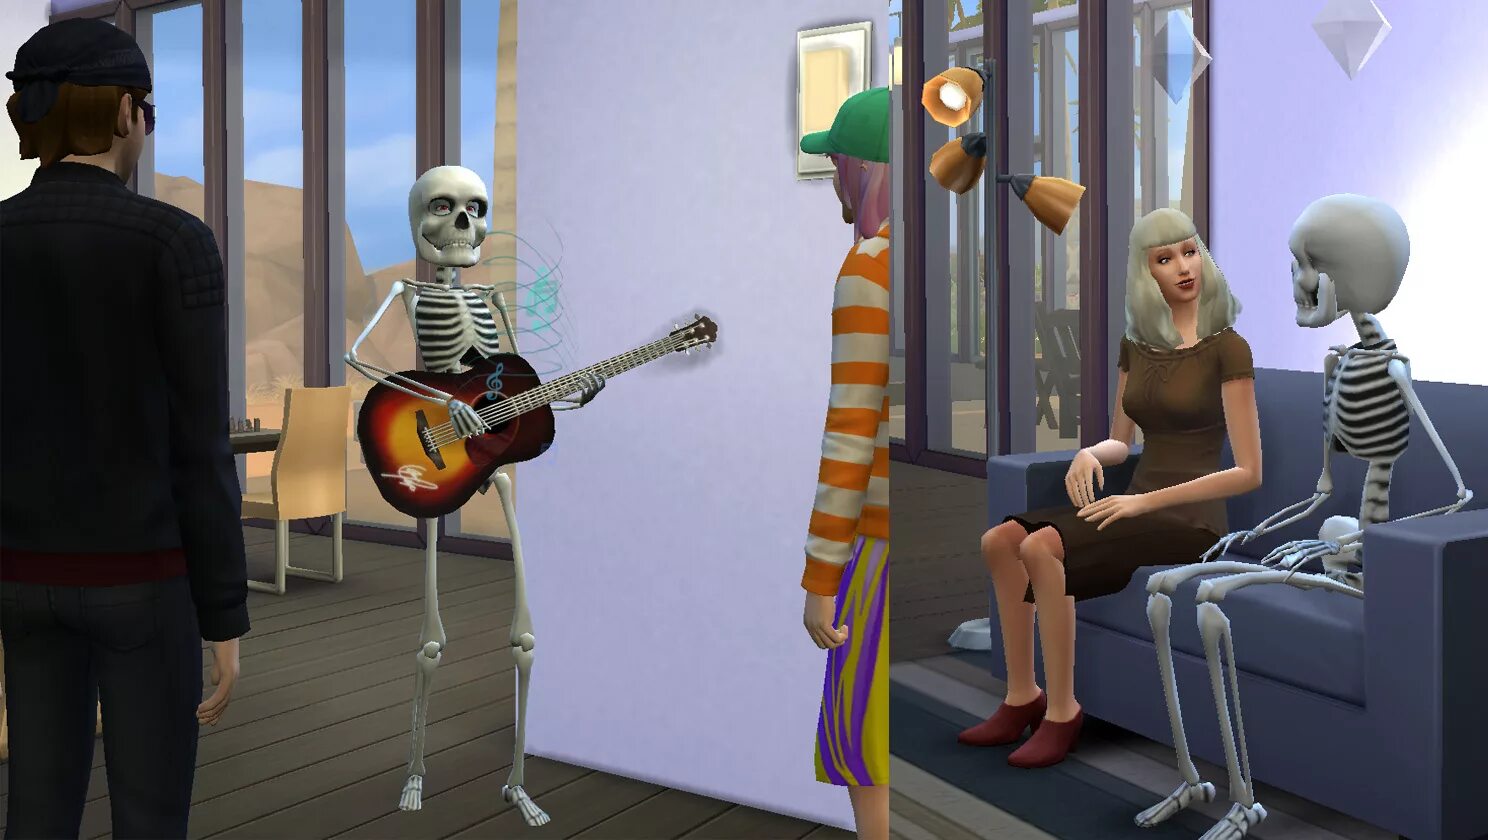 SIMS 4 скелет. SIMS 4 Mod Skeleton. The SIMS 4 костюм скелет. Симс 4 скелет сим. Симс голод